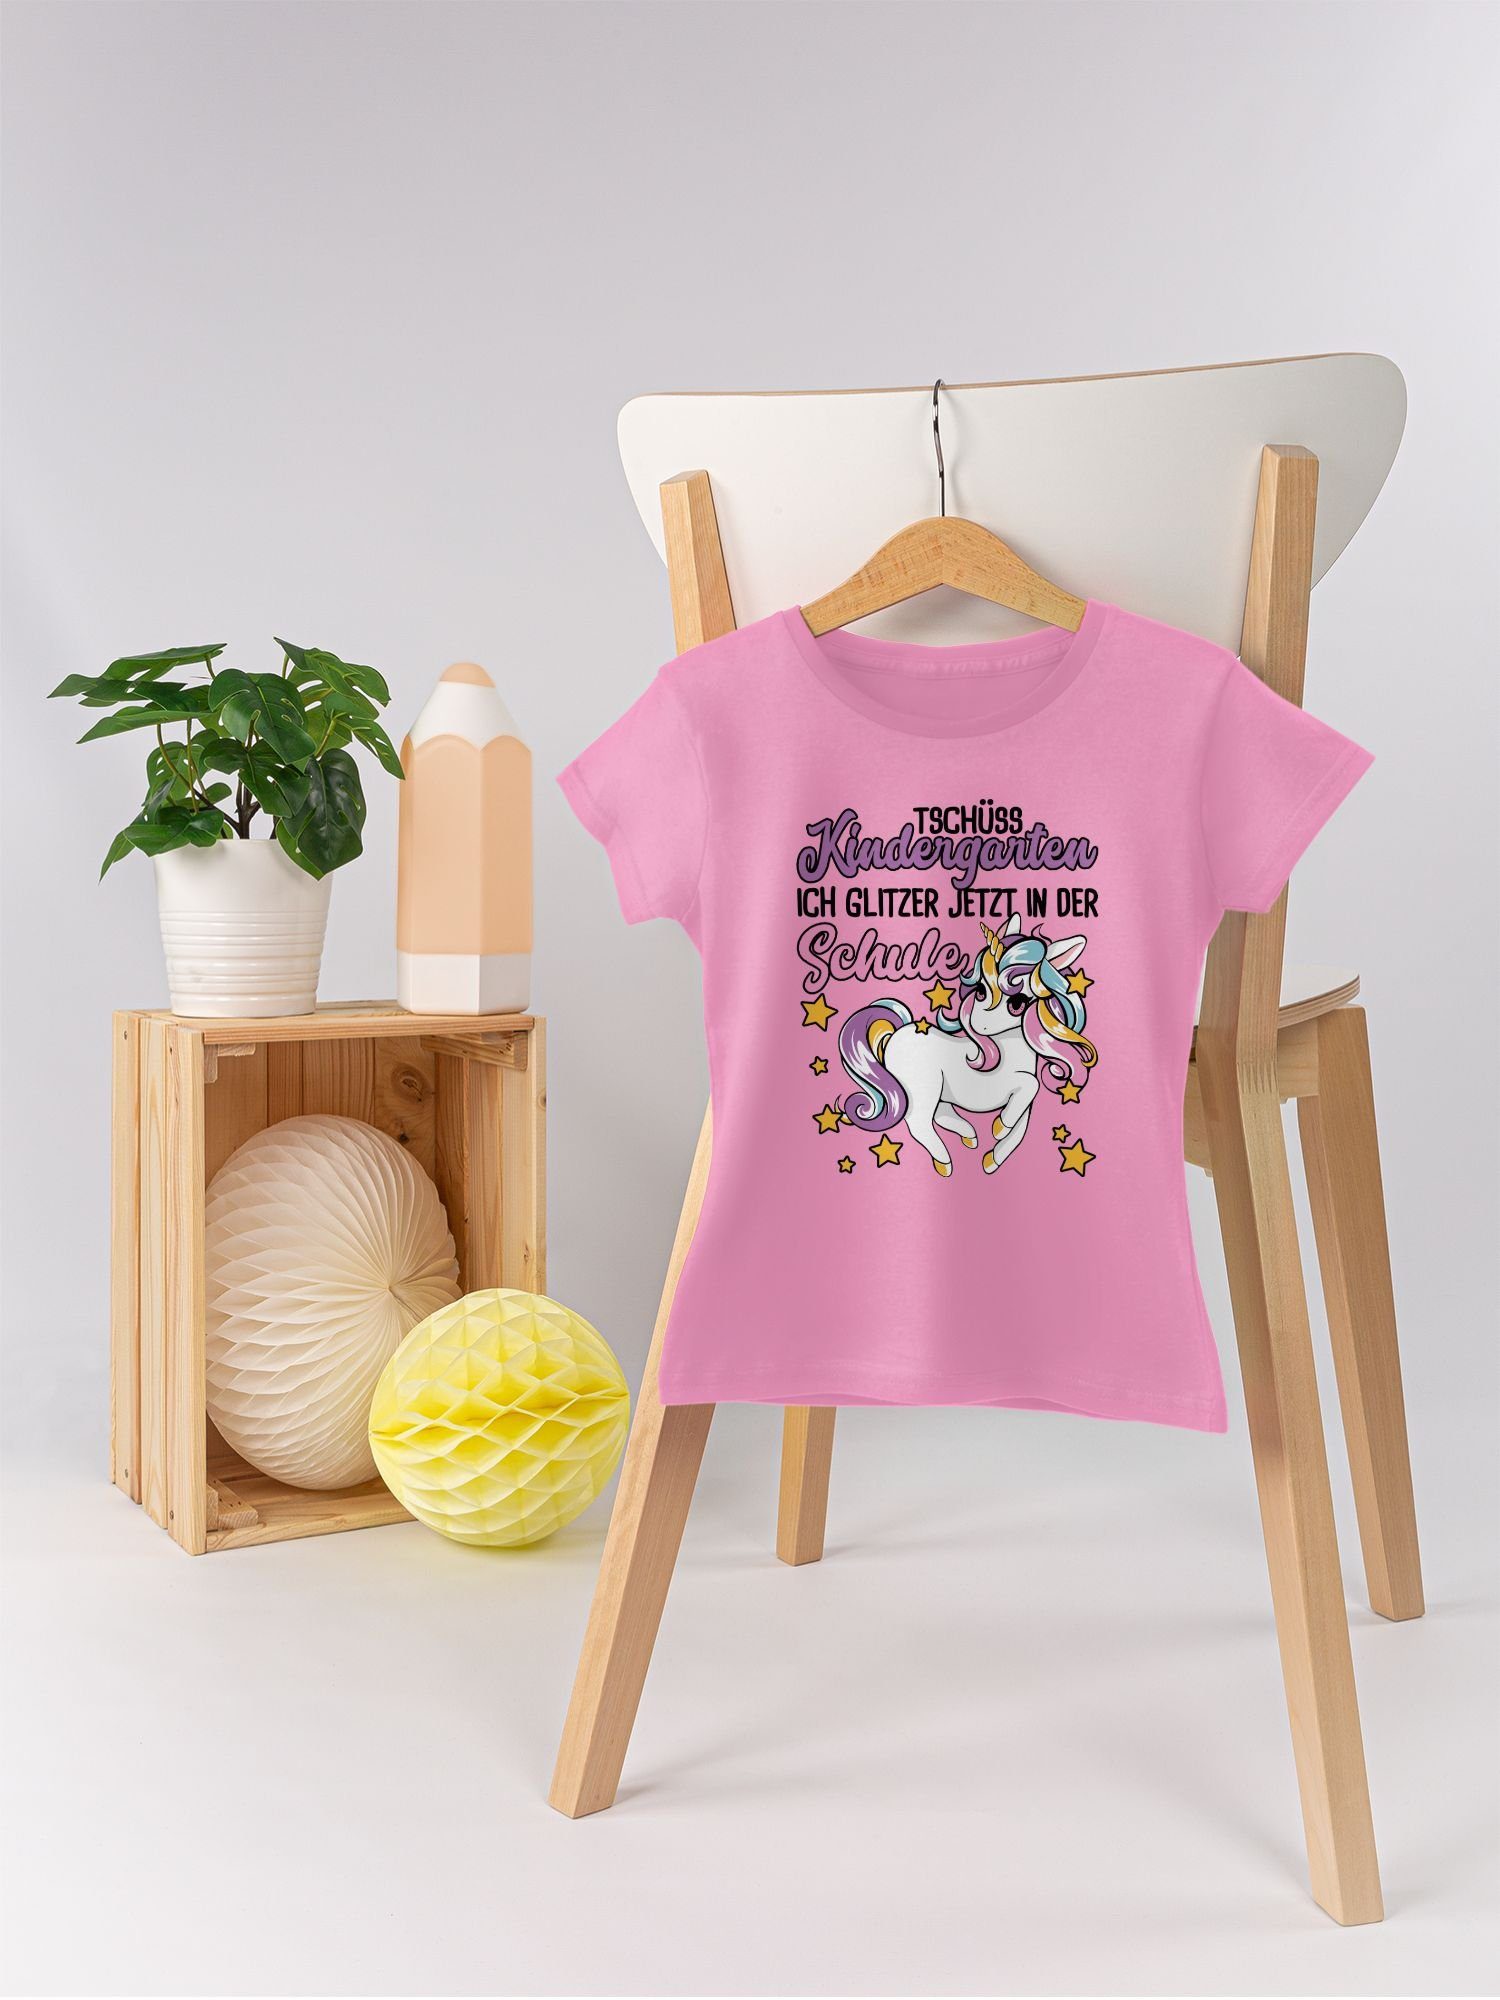 Shirtracer T-Shirt Tschüss Kindergarten Einhorn in der 3 jetzt Glitzer Einschulung Rosa - Schule Mädchen